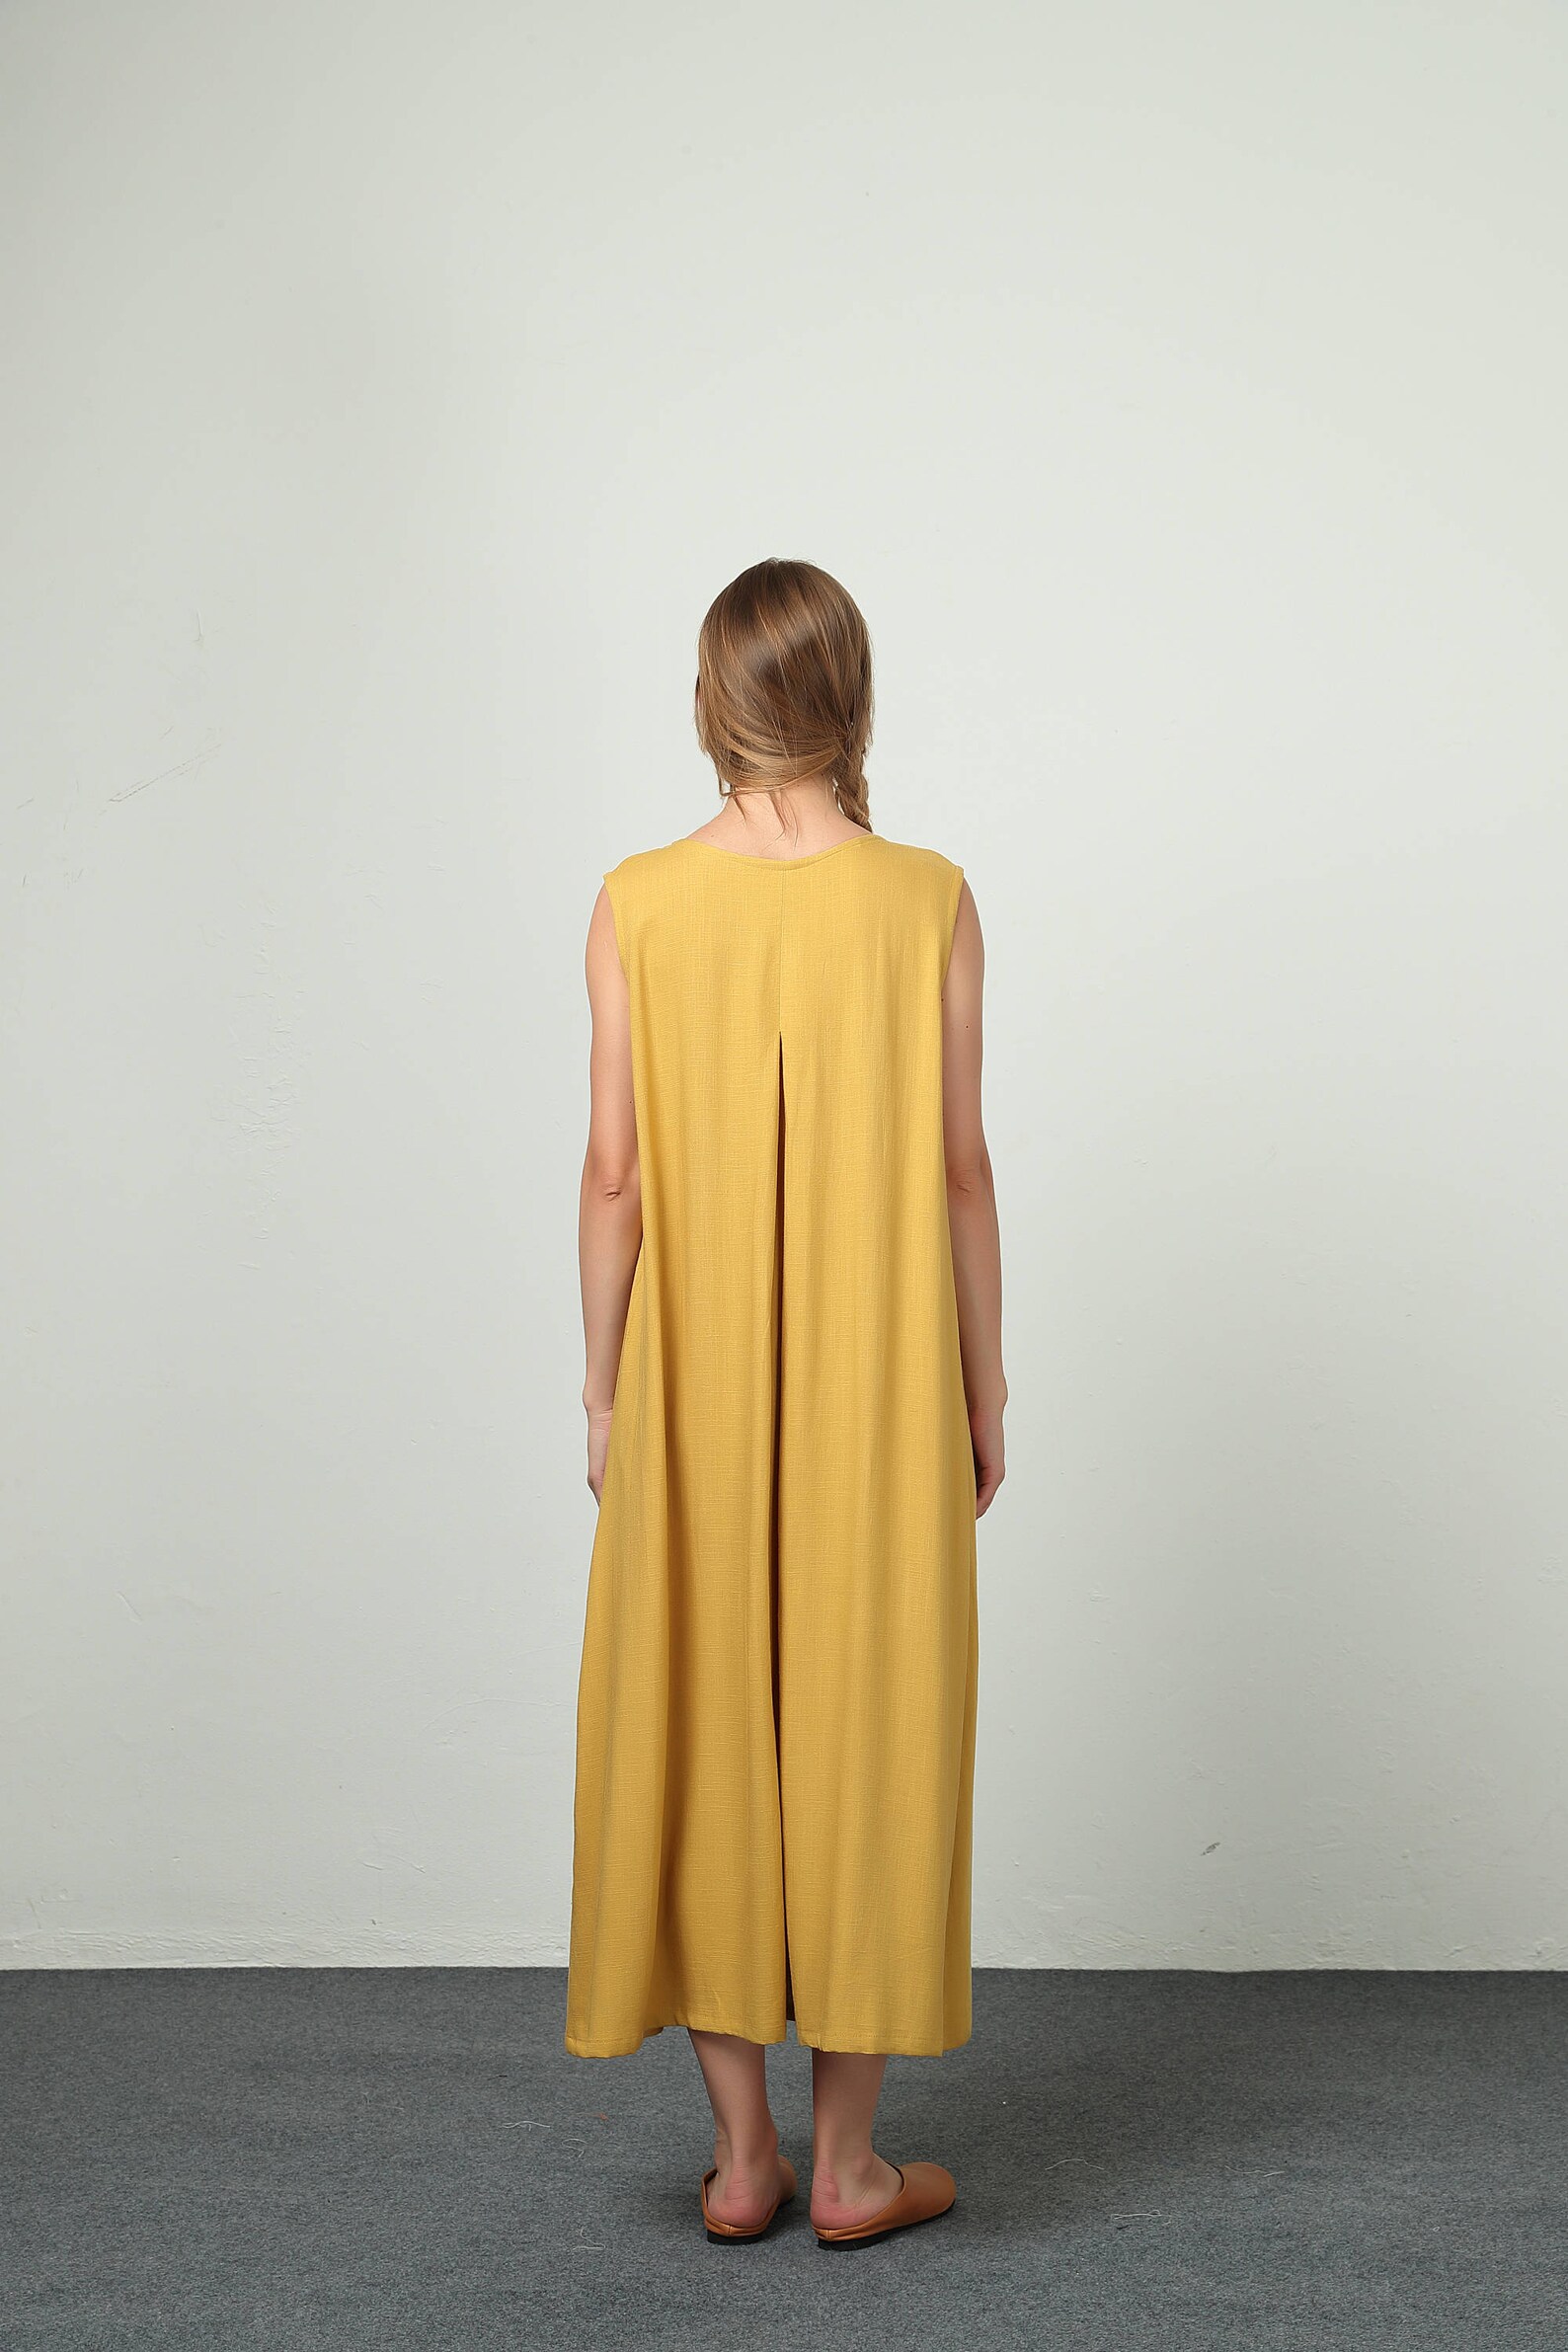 Sleeveless Summer Maxi Dresses Women's Oversize Cotton - Etsy